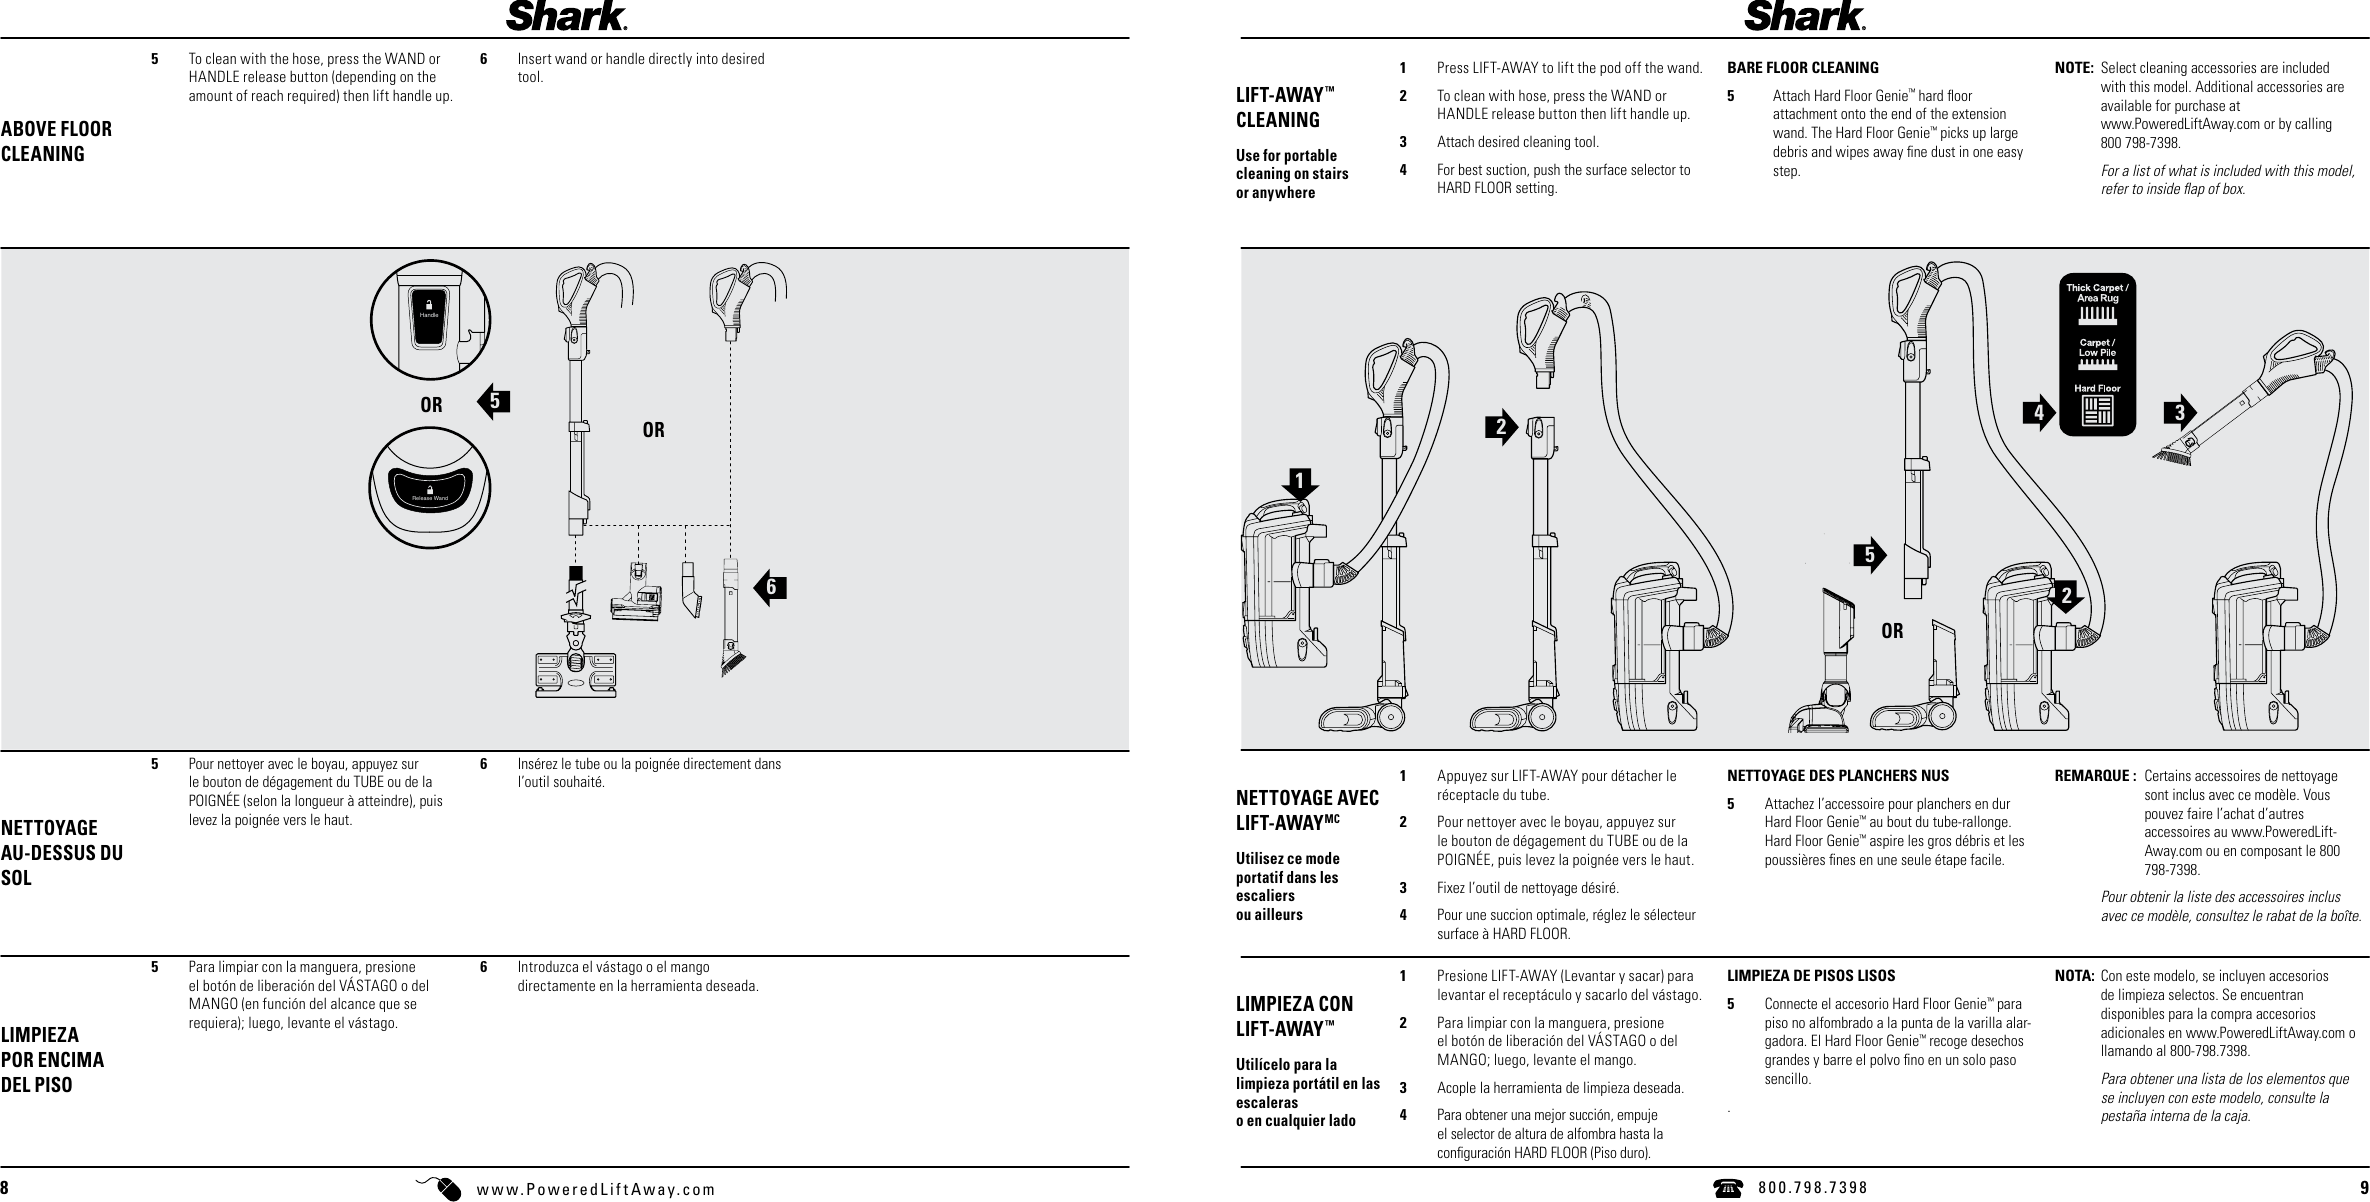 Page 5 of 11 - Shark Shark-Shark-Rotator-Powered-Lift-Away-Upright-Vacuum-Nv652-Owners-Guide-  Shark-shark-rotator-powered-lift-away-upright-vacuum-nv652-owners-guide